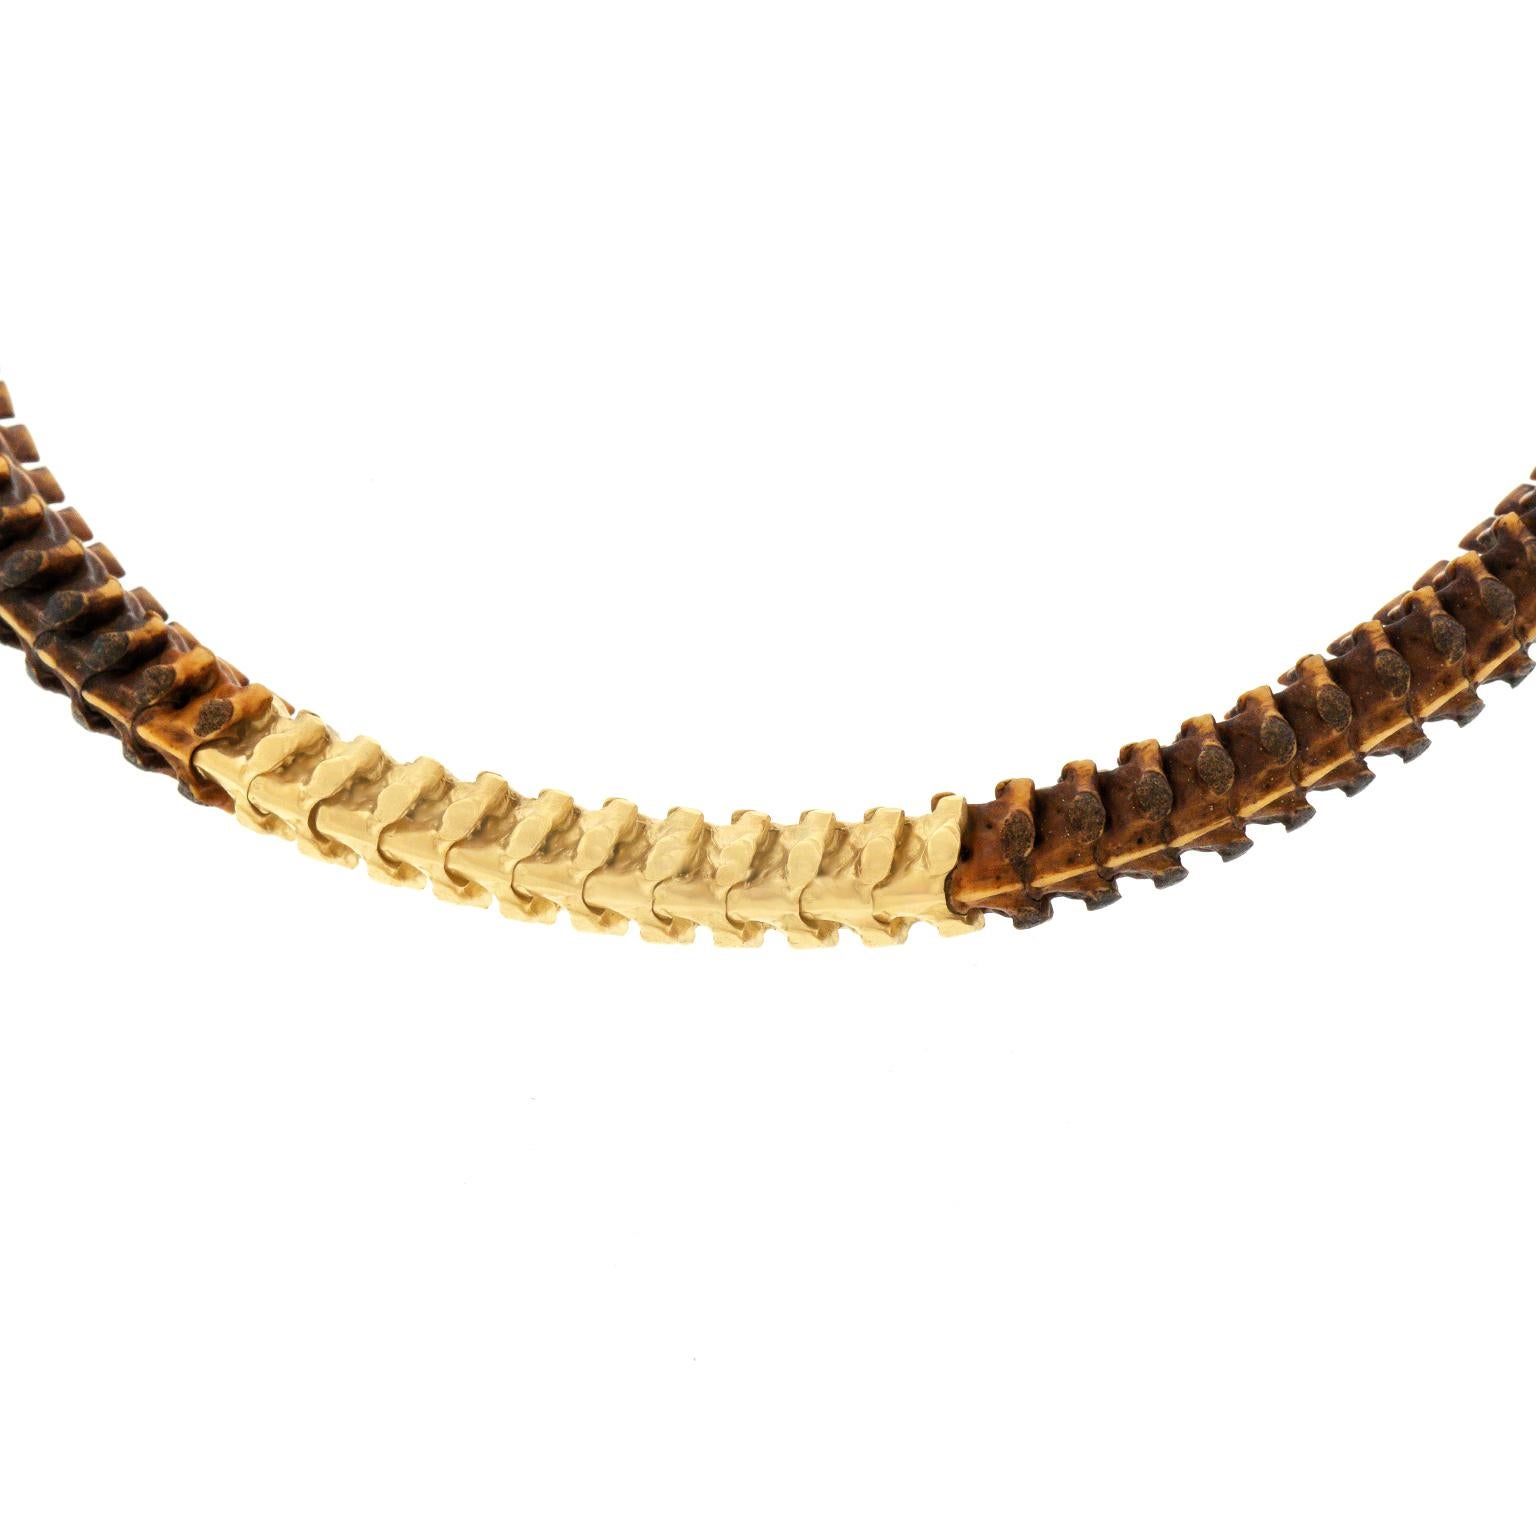 Women's Dan Telleen Snake Vertebrae and Gold Necklace, circa 1992 Vail, Colorado